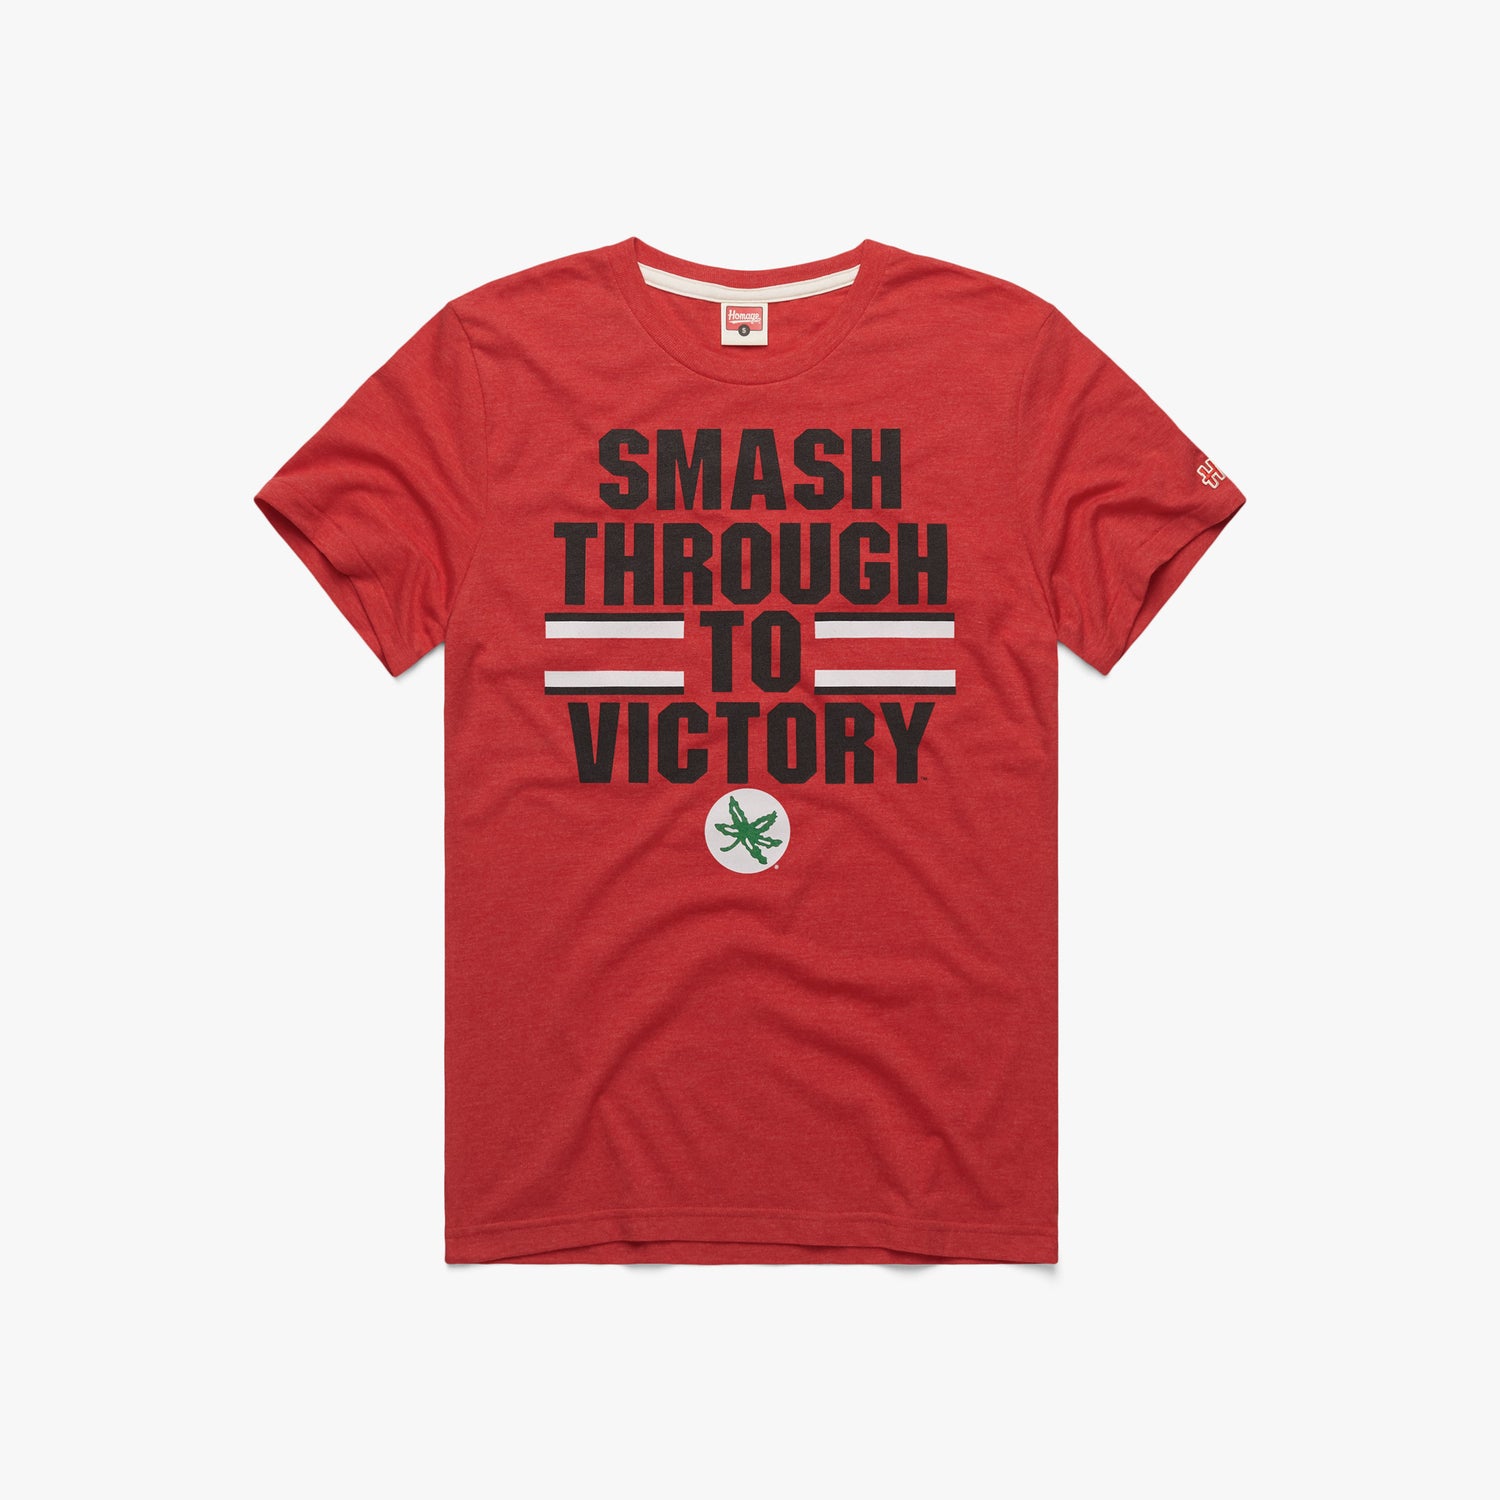 Smash Through To Victory